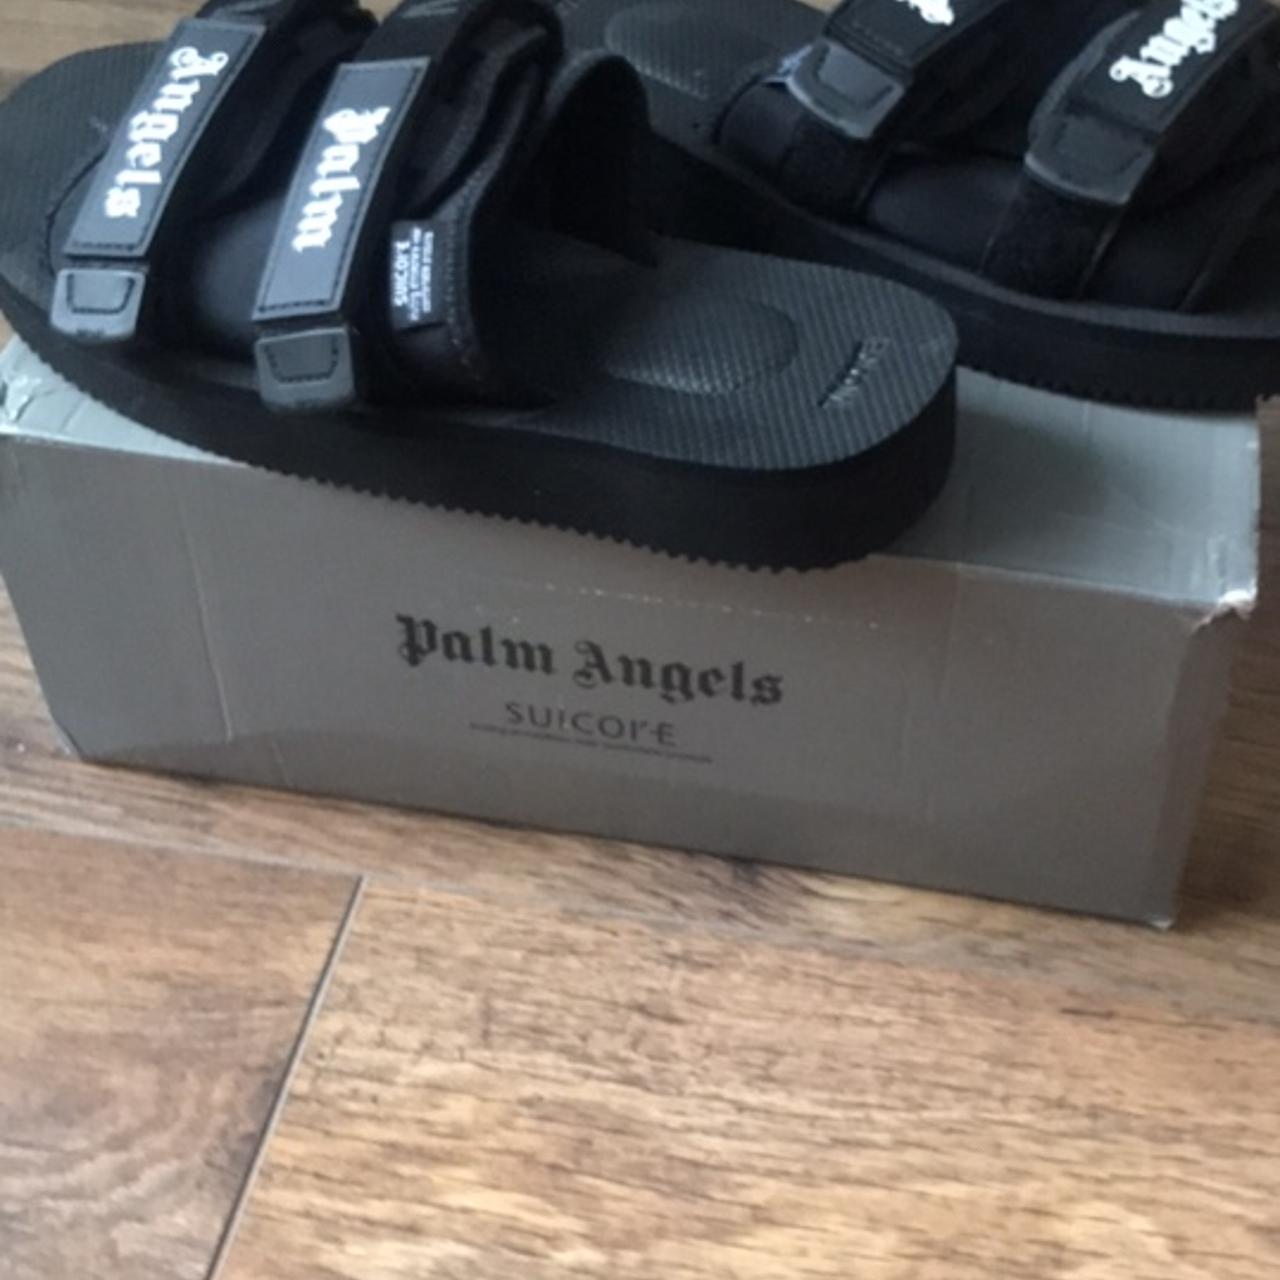 Rare palm angels x suicoke slides sandals white and - Depop